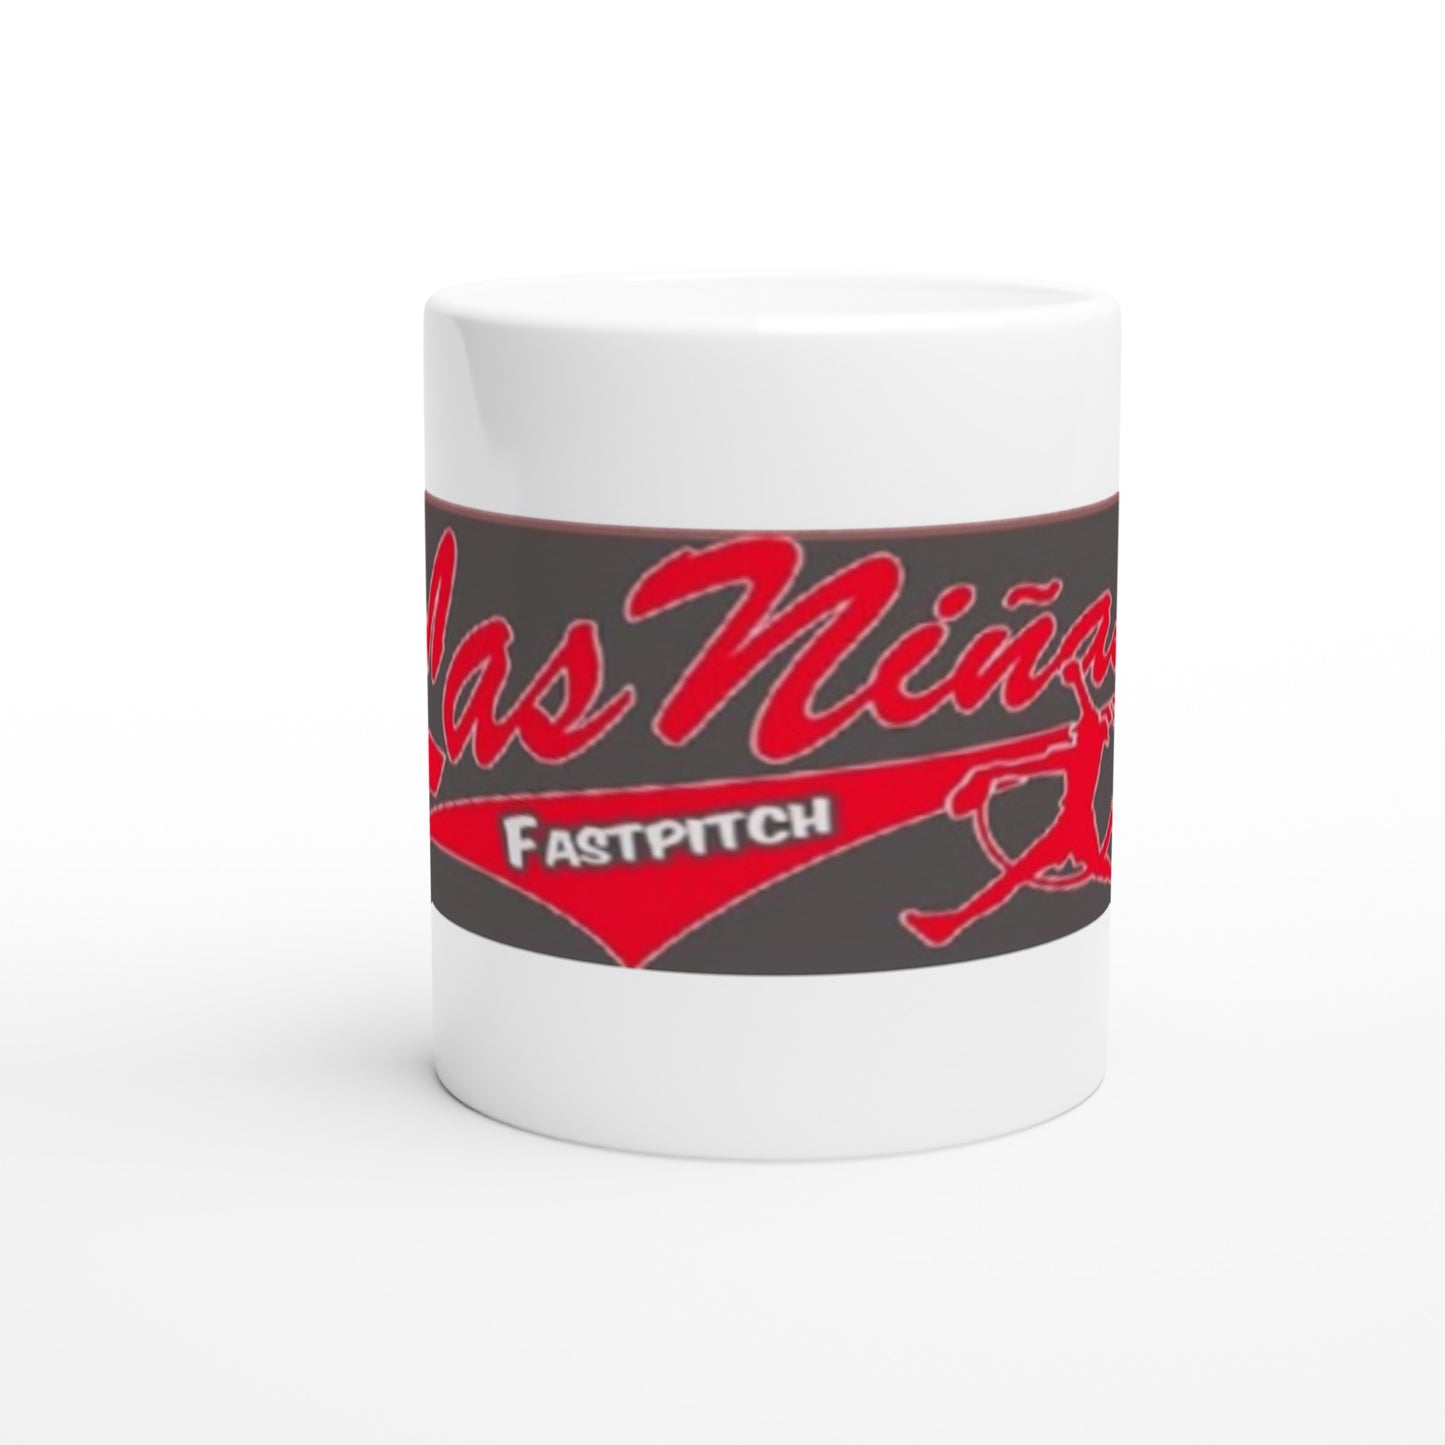 White 11oz Ceramic Las Ninas Fastpitch Mug